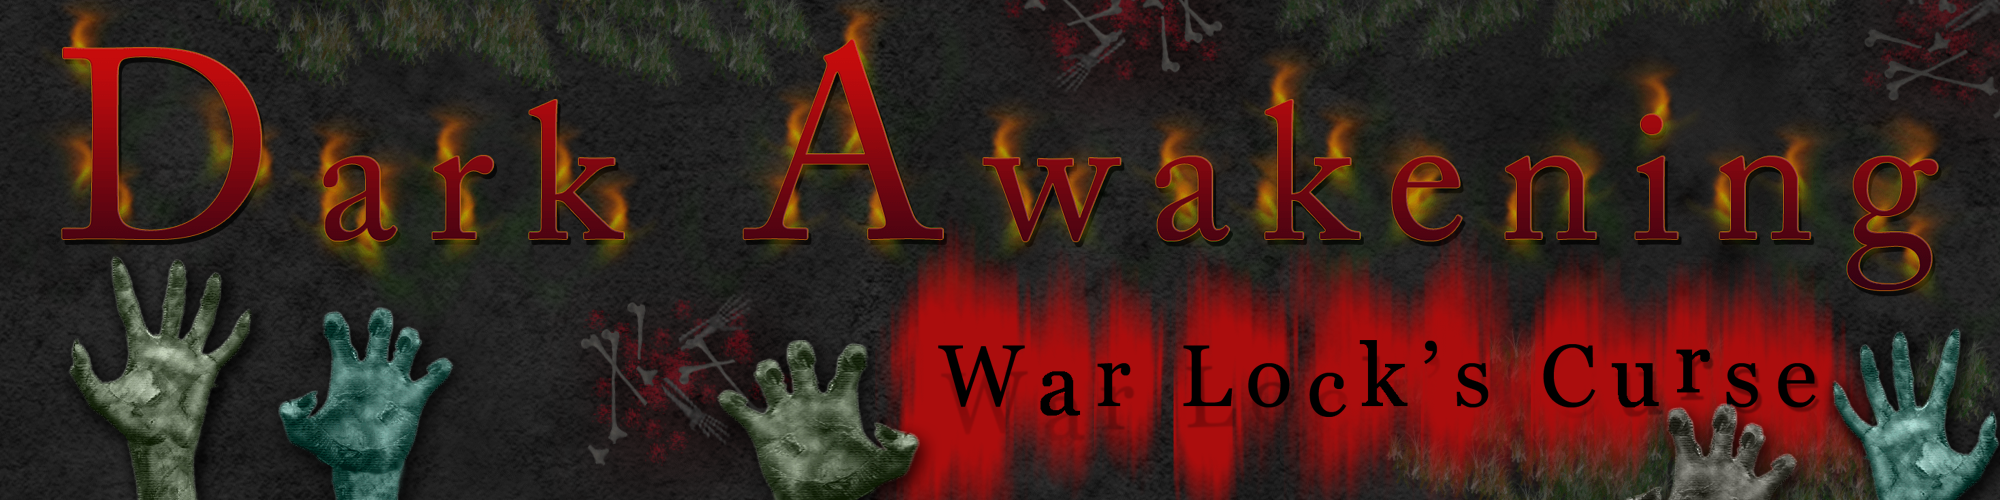 Dark Awakening War Lock's Curse